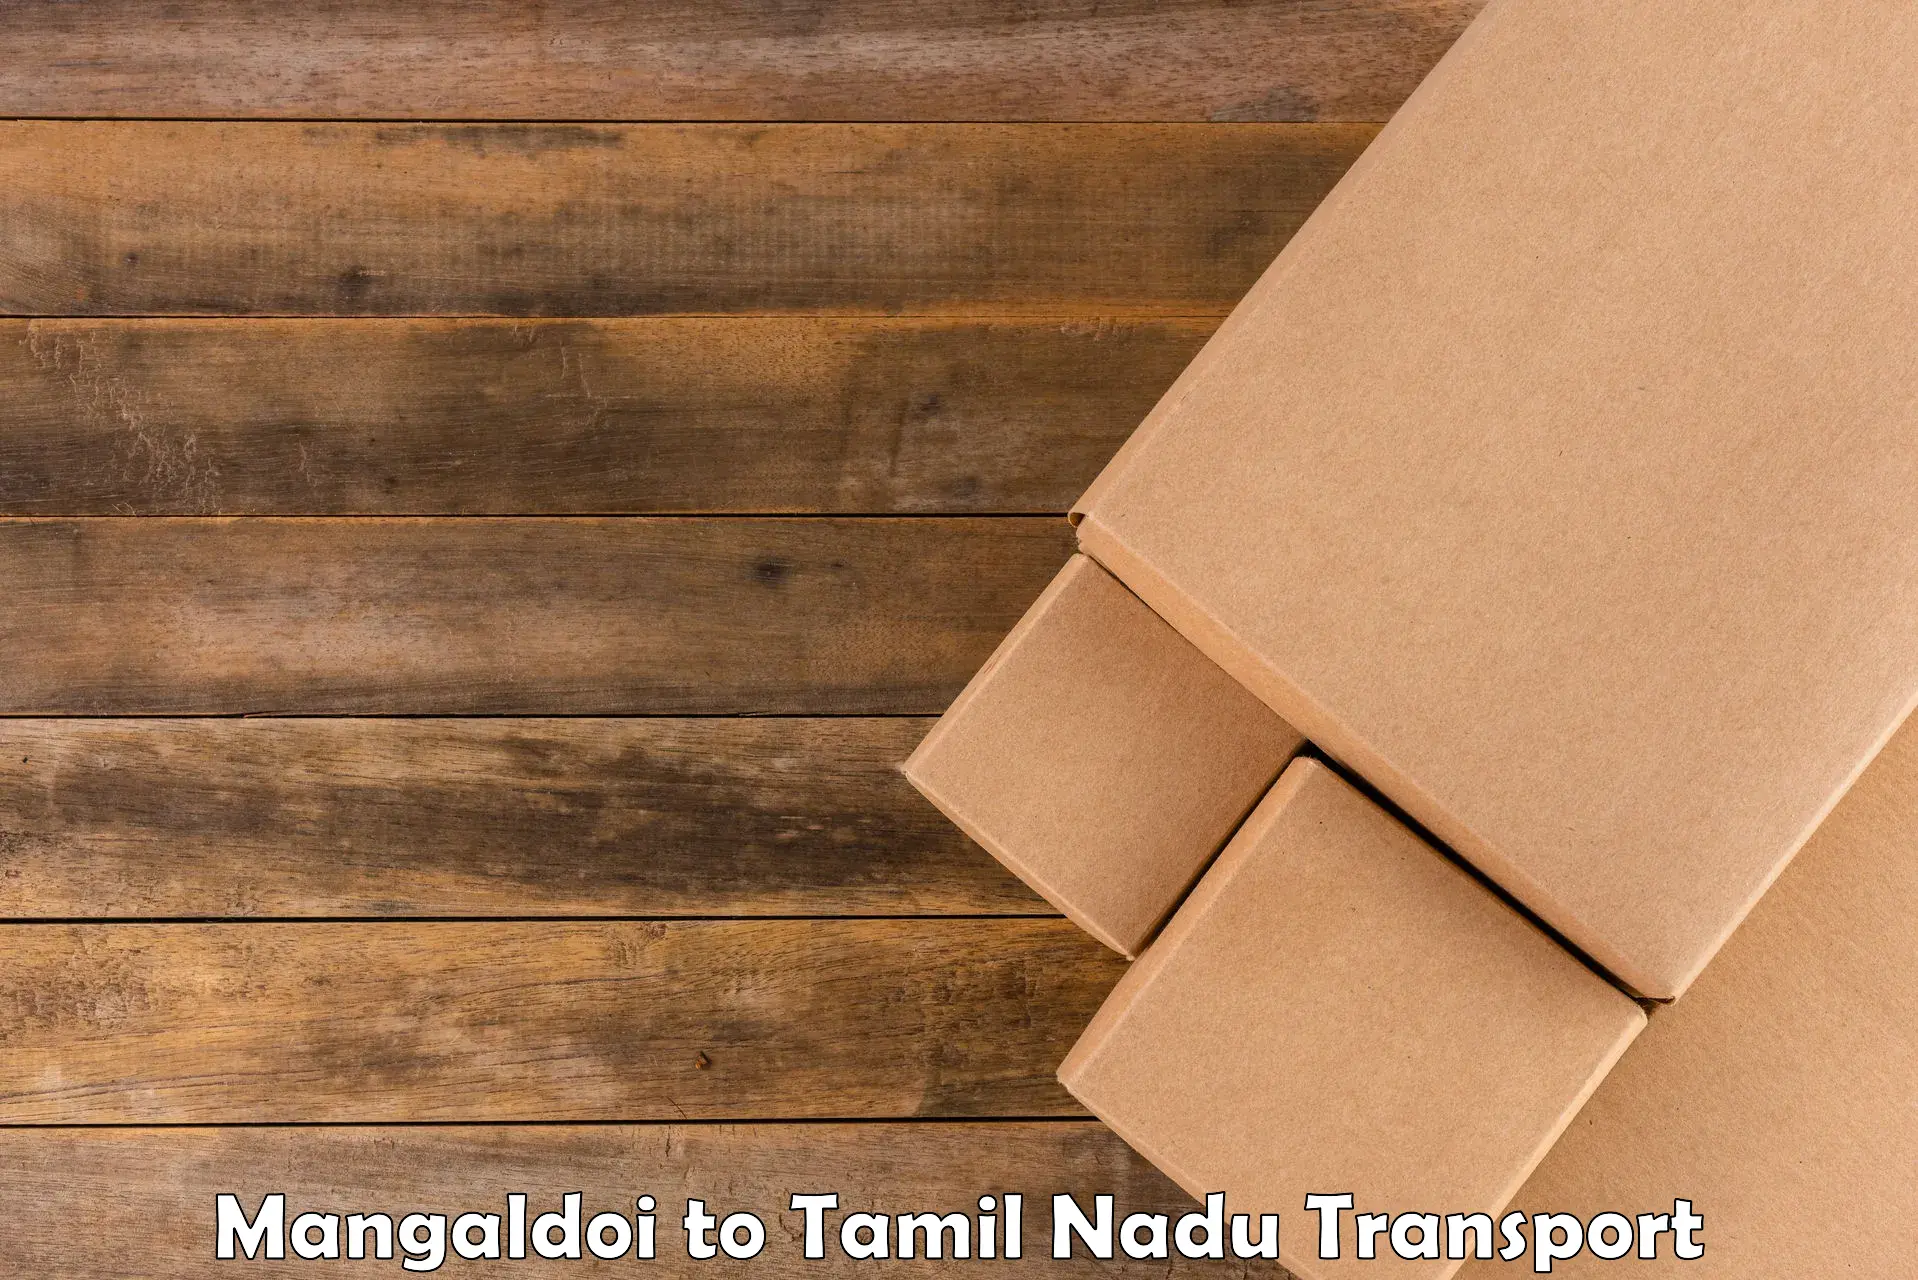 Transport in sharing Mangaldoi to Dindigul